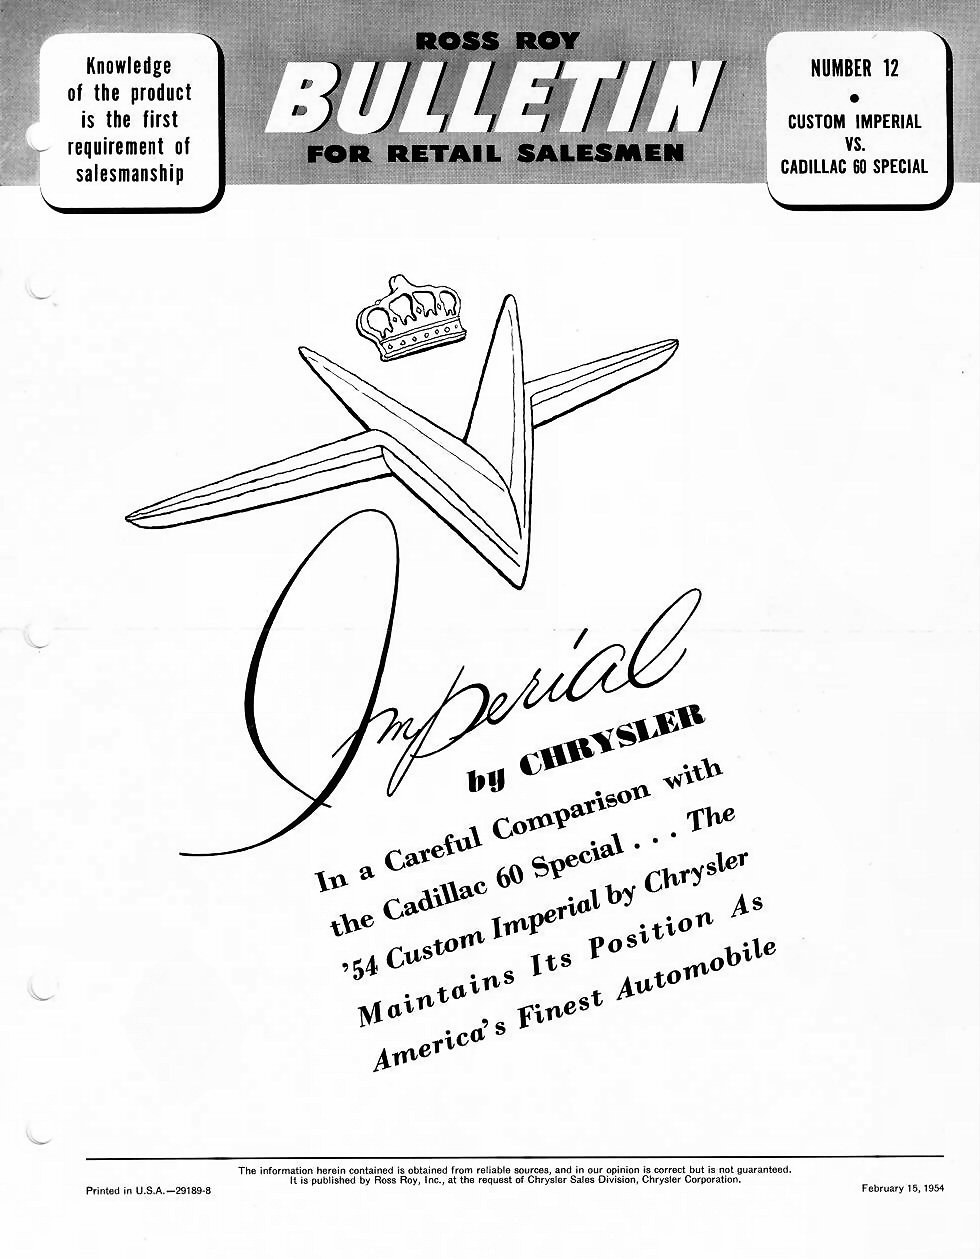 1954_Chrysler_Imperial_Comparison-01